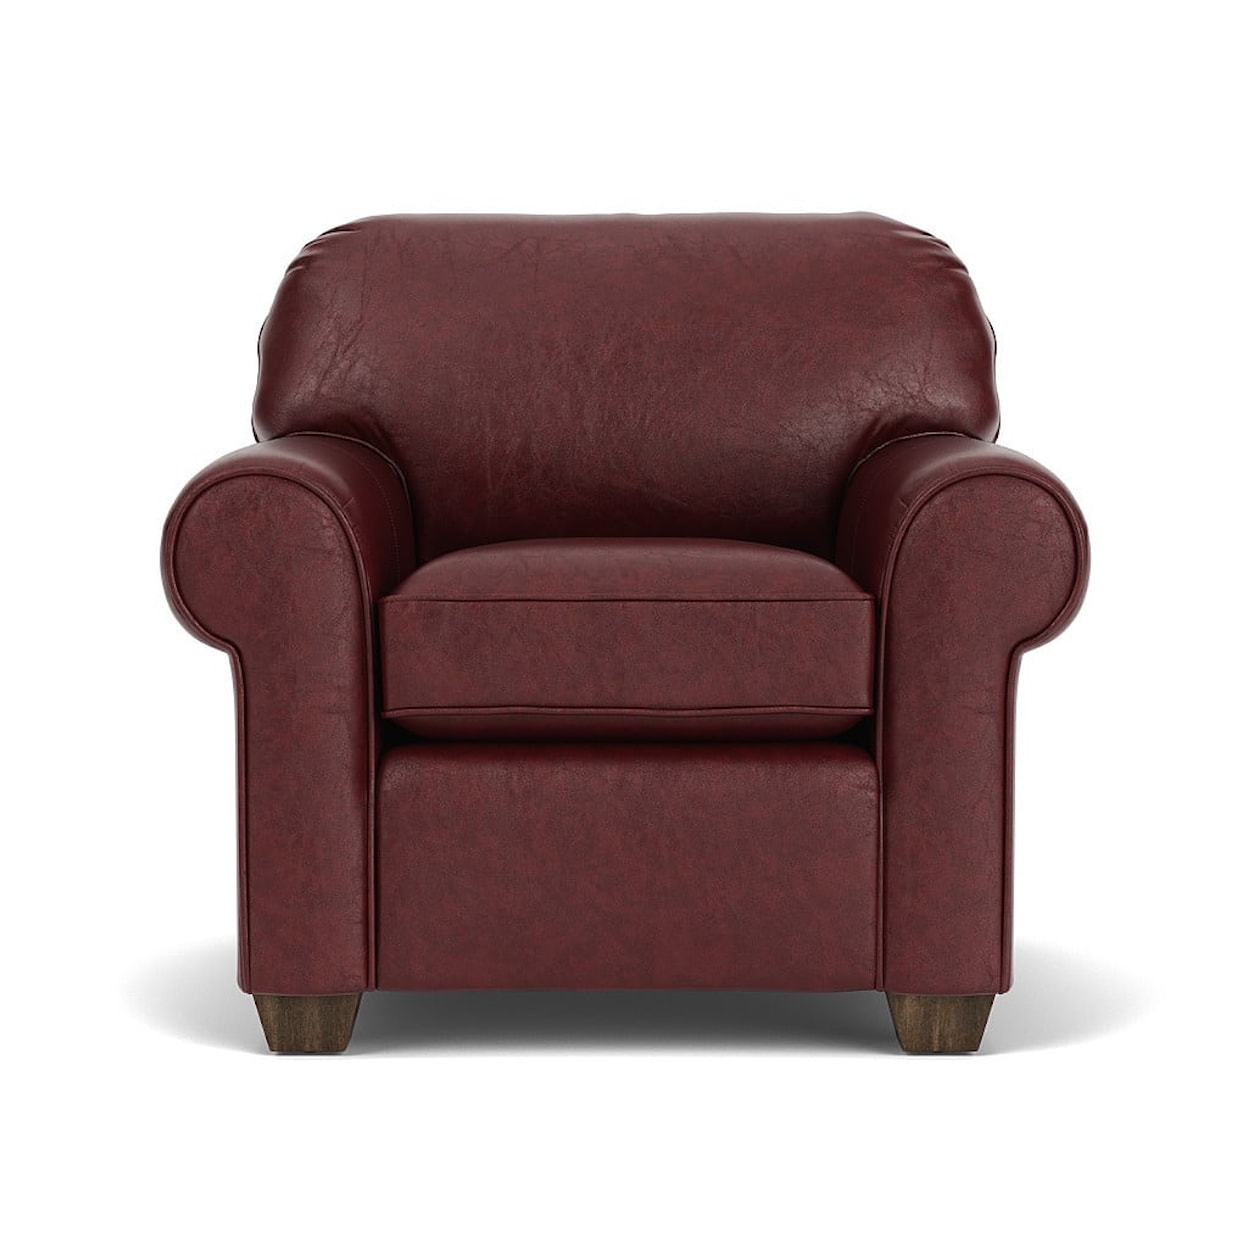 Flexsteel Thornton 5535 Chair